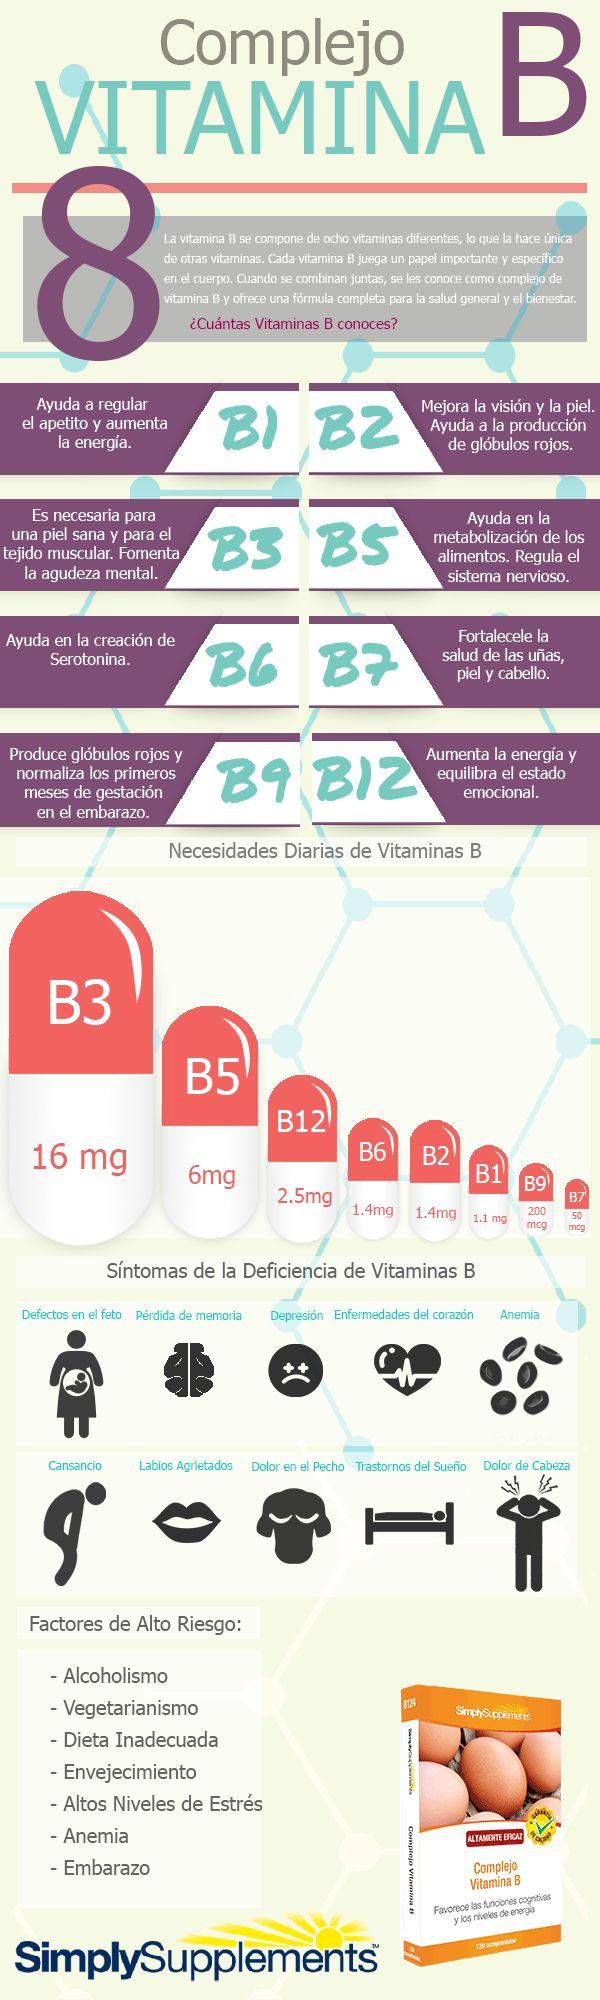 infografia beneficios vitamina b